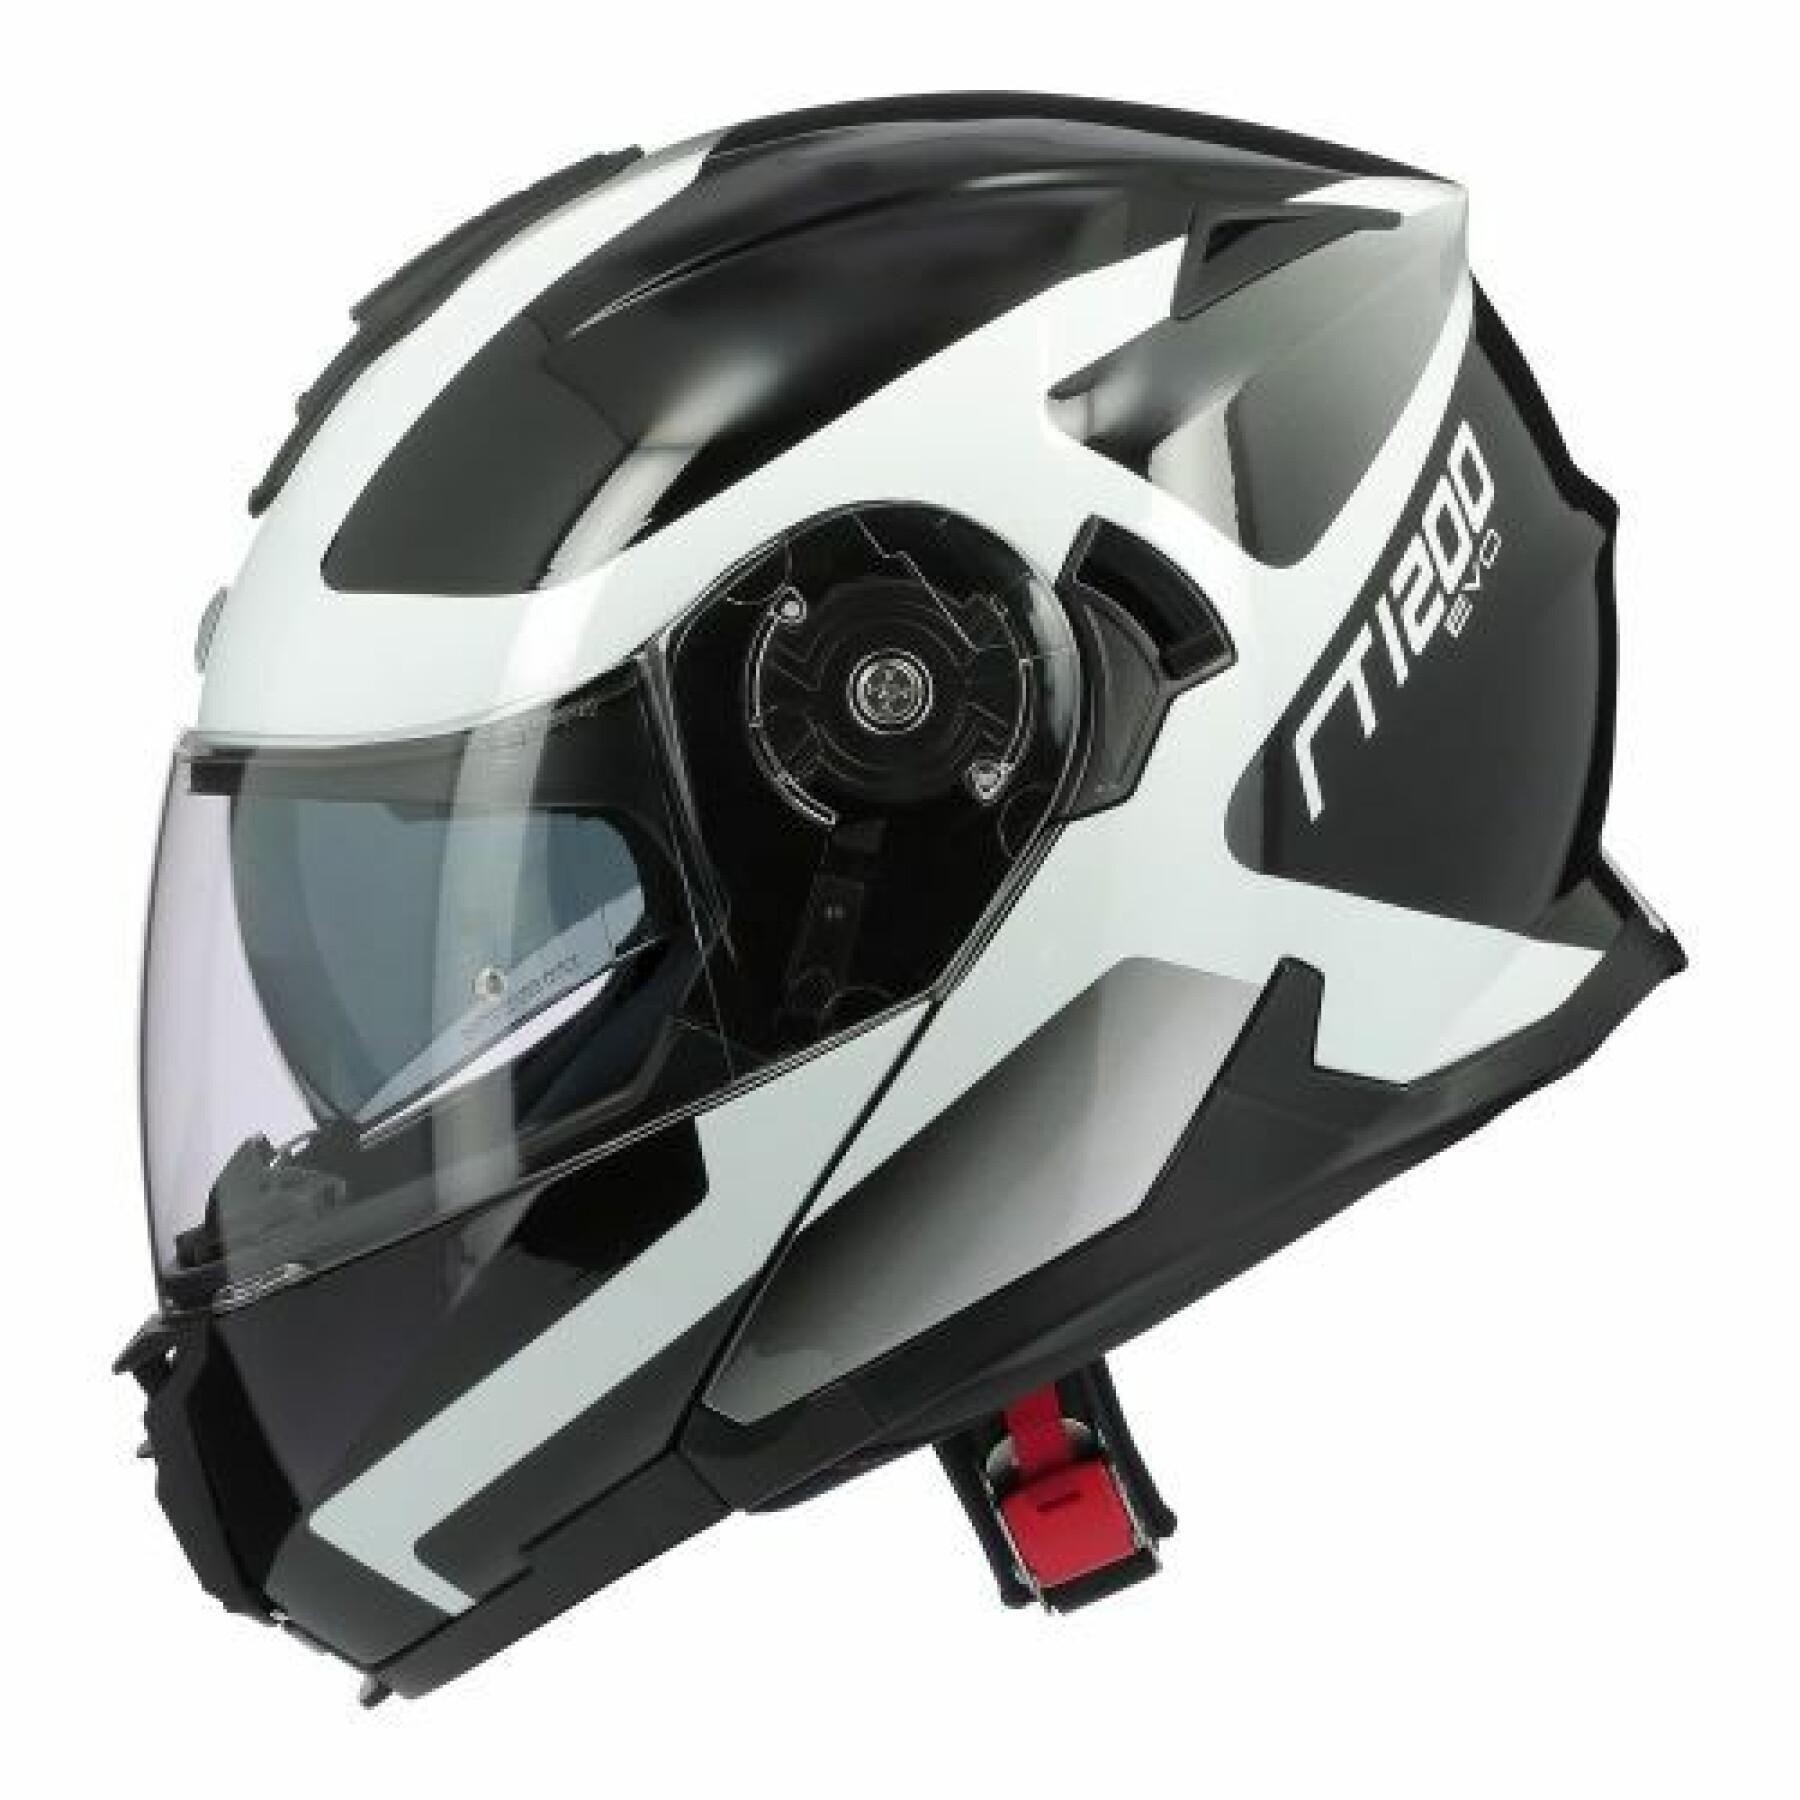 Modular motorcycle helmet Astone Rt1200 Evo Astar